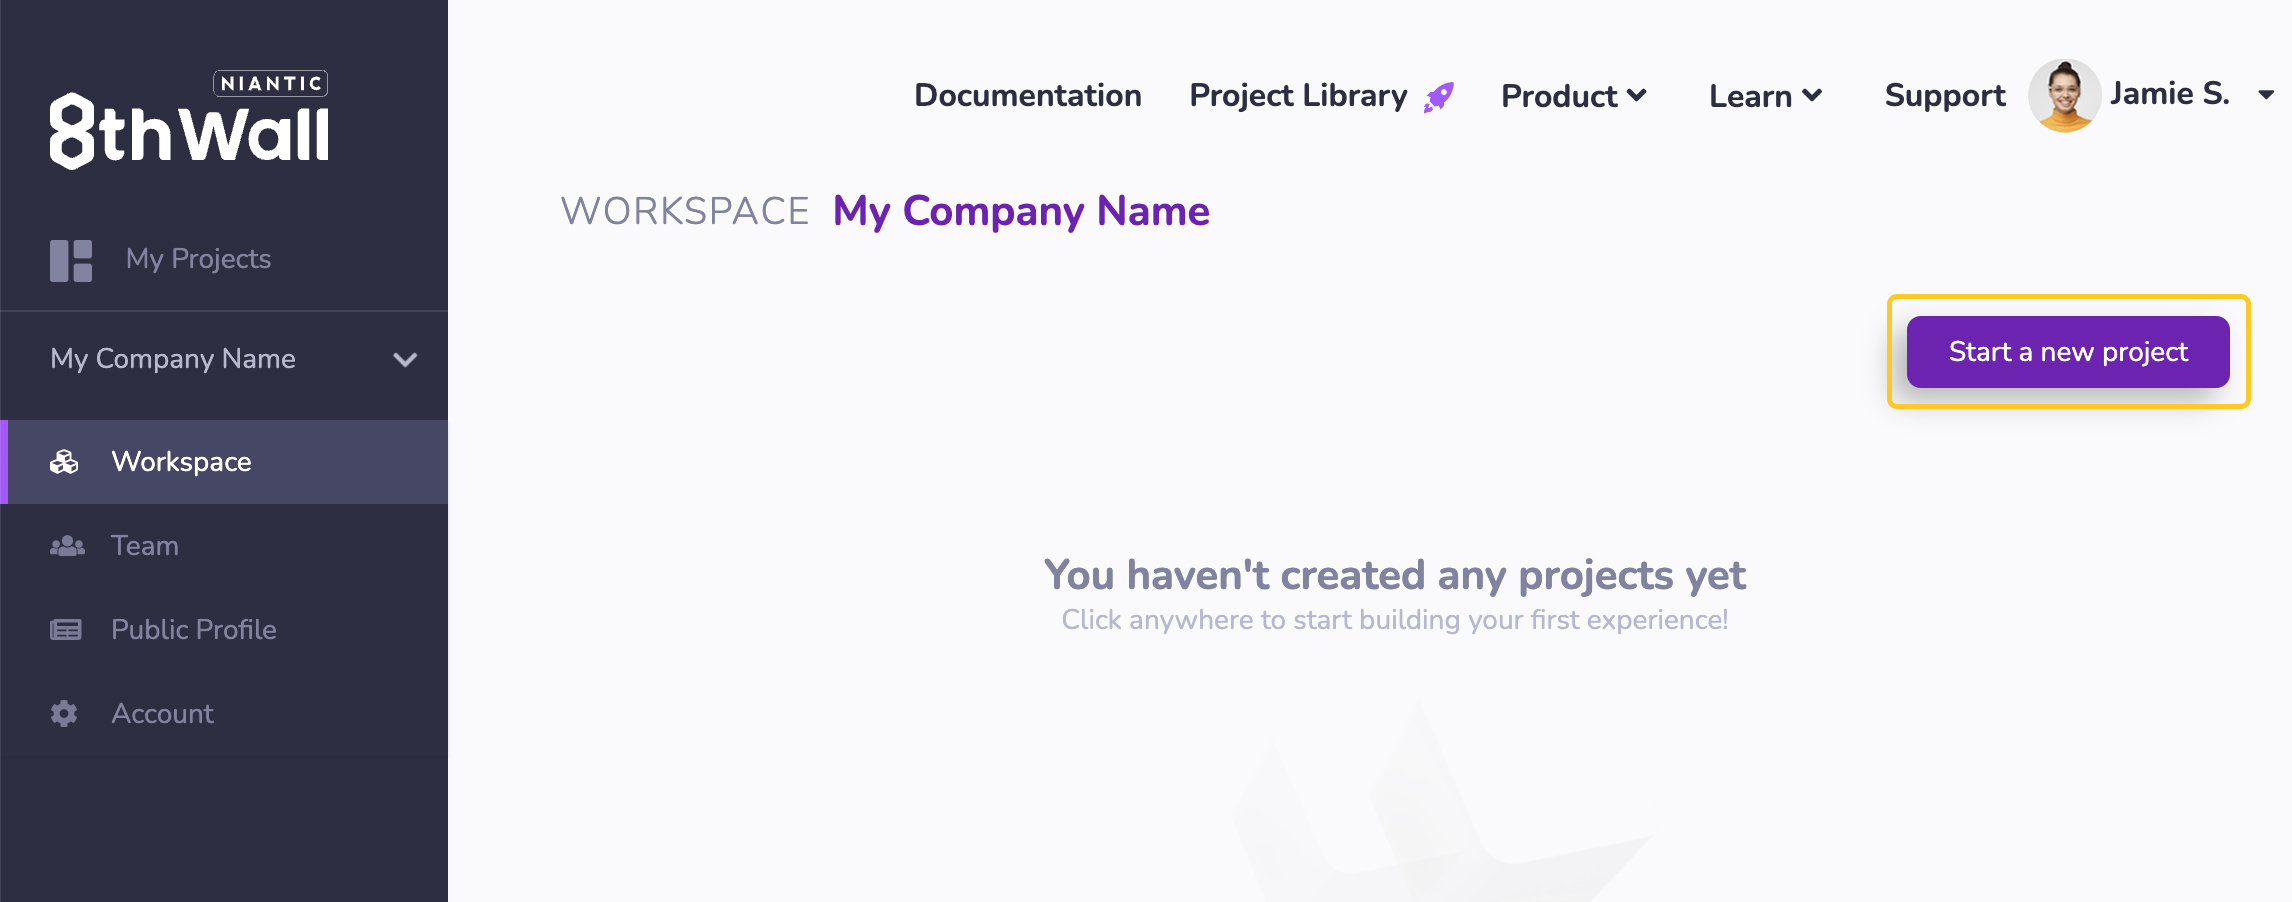 StartNewProject